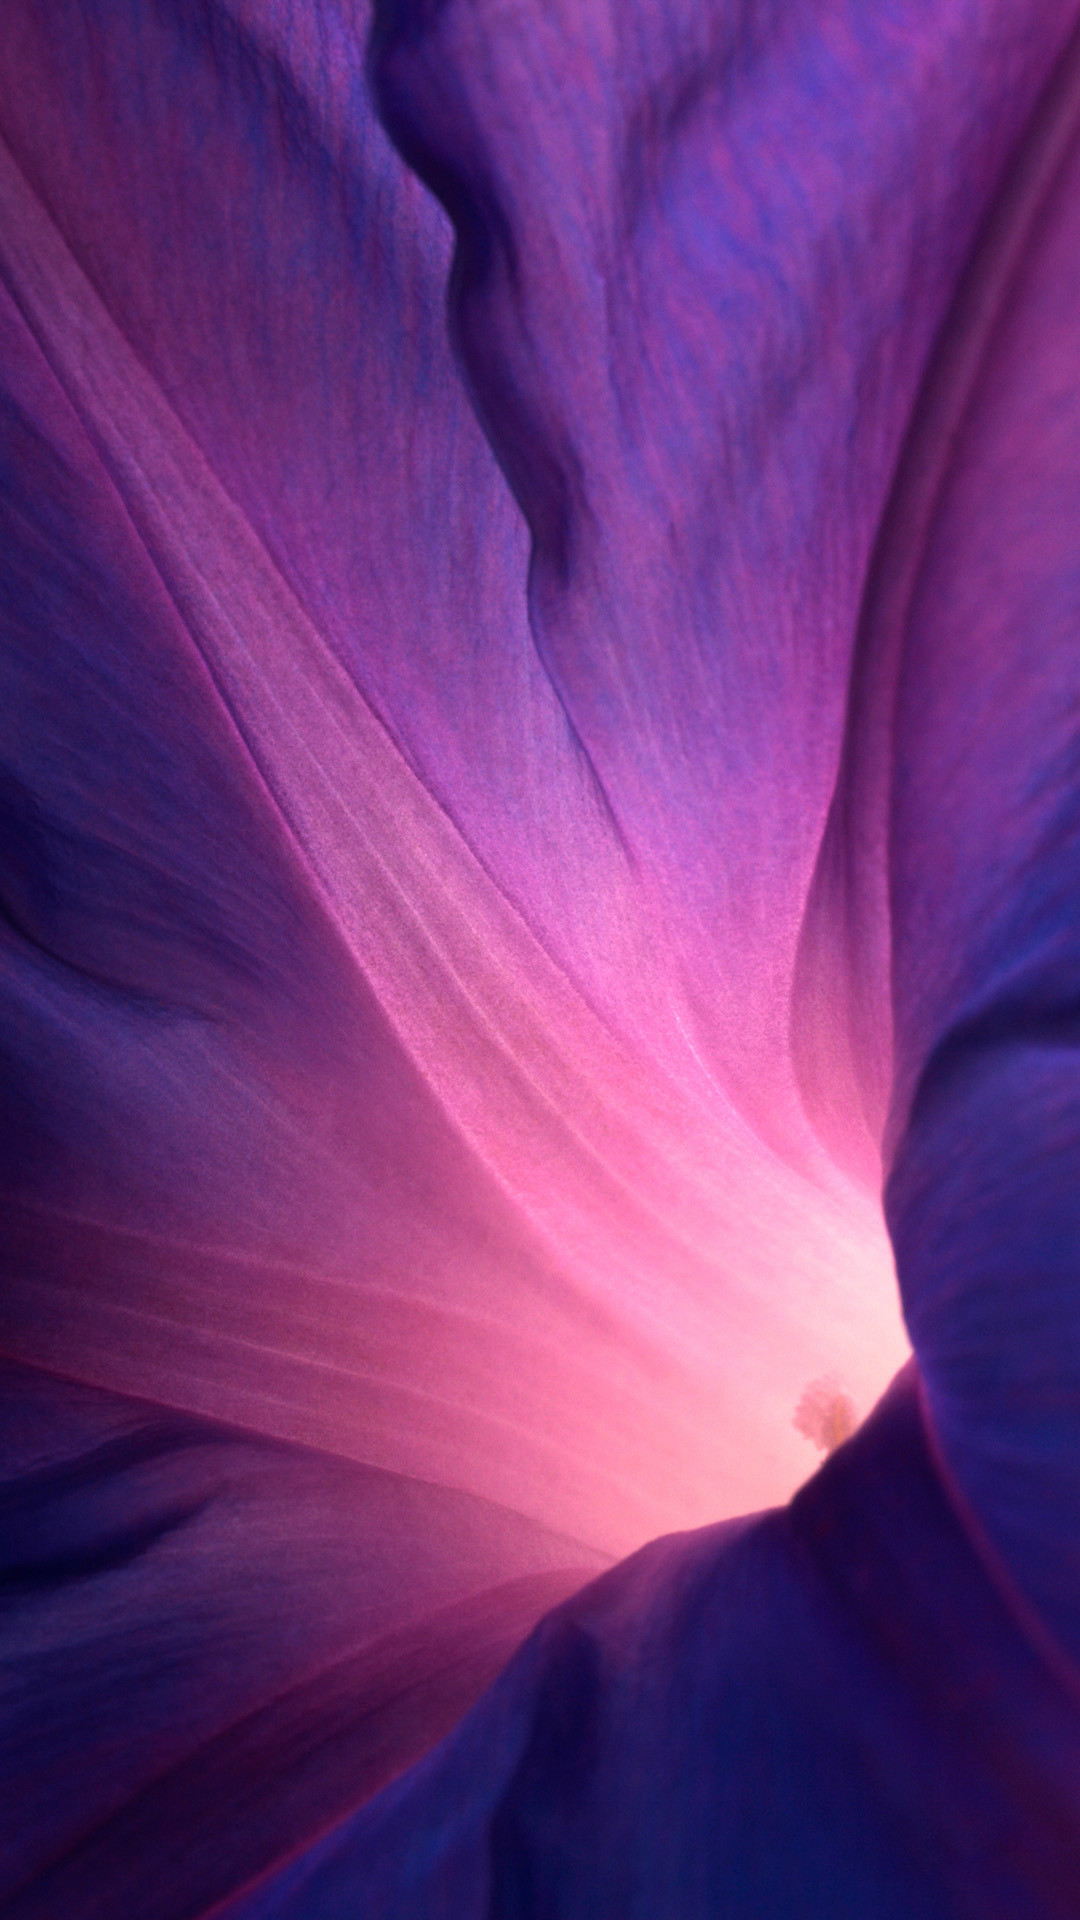 1080x1920 Abstract Purple Flower Lockscreen iPhone 6 Wallpaper Download iPhone  